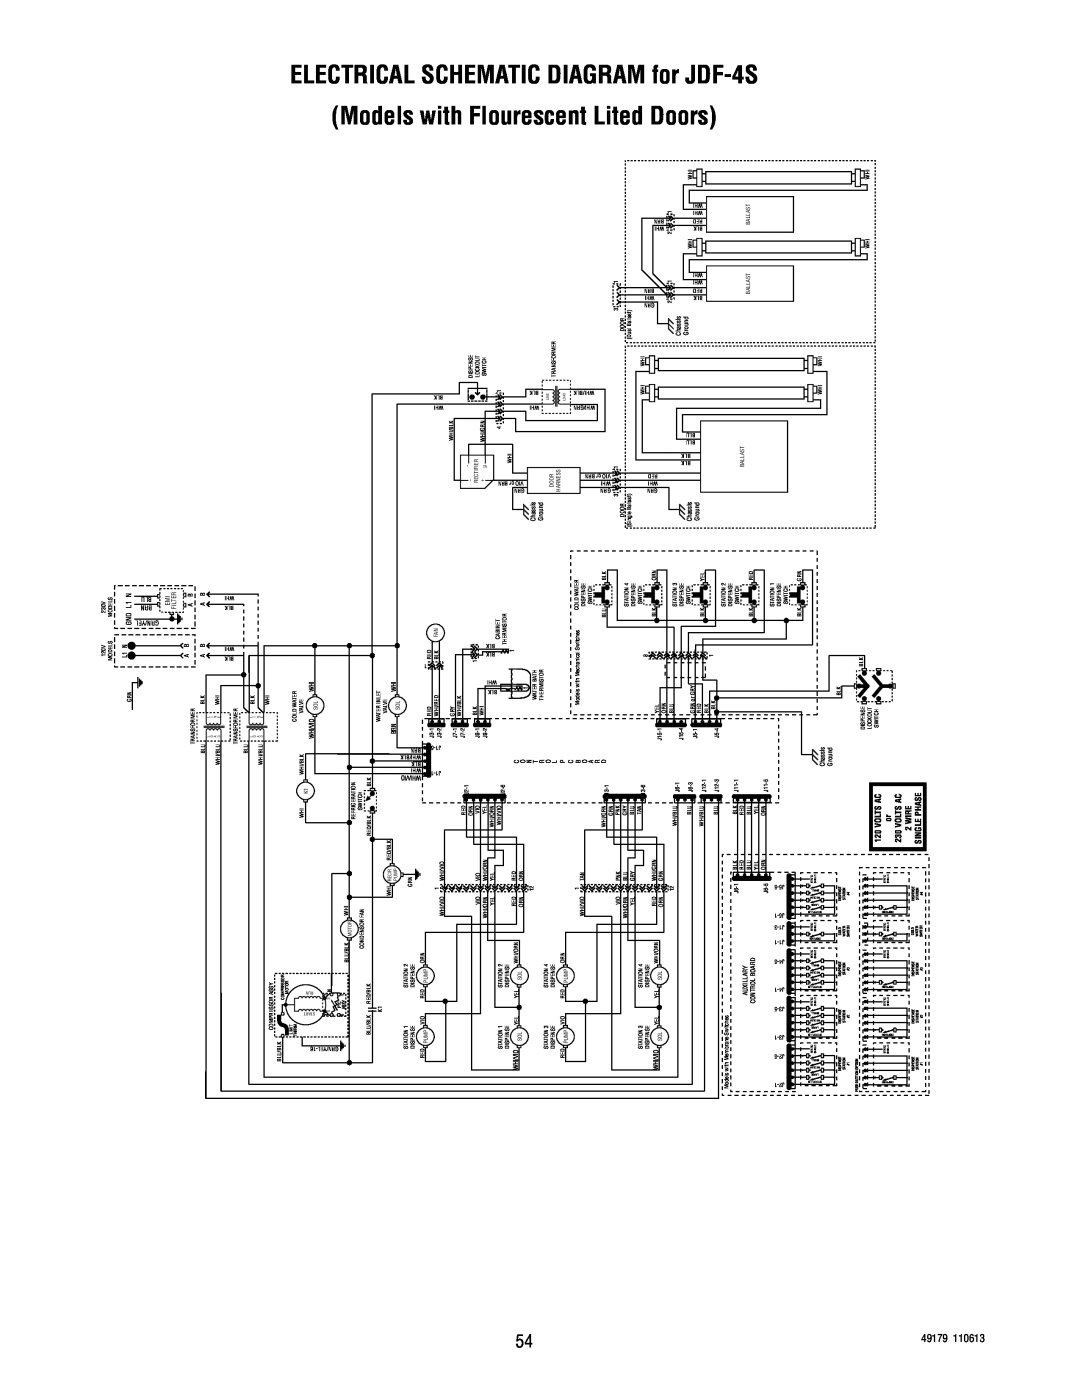 Bunn ELECTRICAL SCHEMATIC DIAGRAM for JDF-4S, Models with Flourescent Lited Doors, Schematic Wiring Diagram Jdf, 49179 